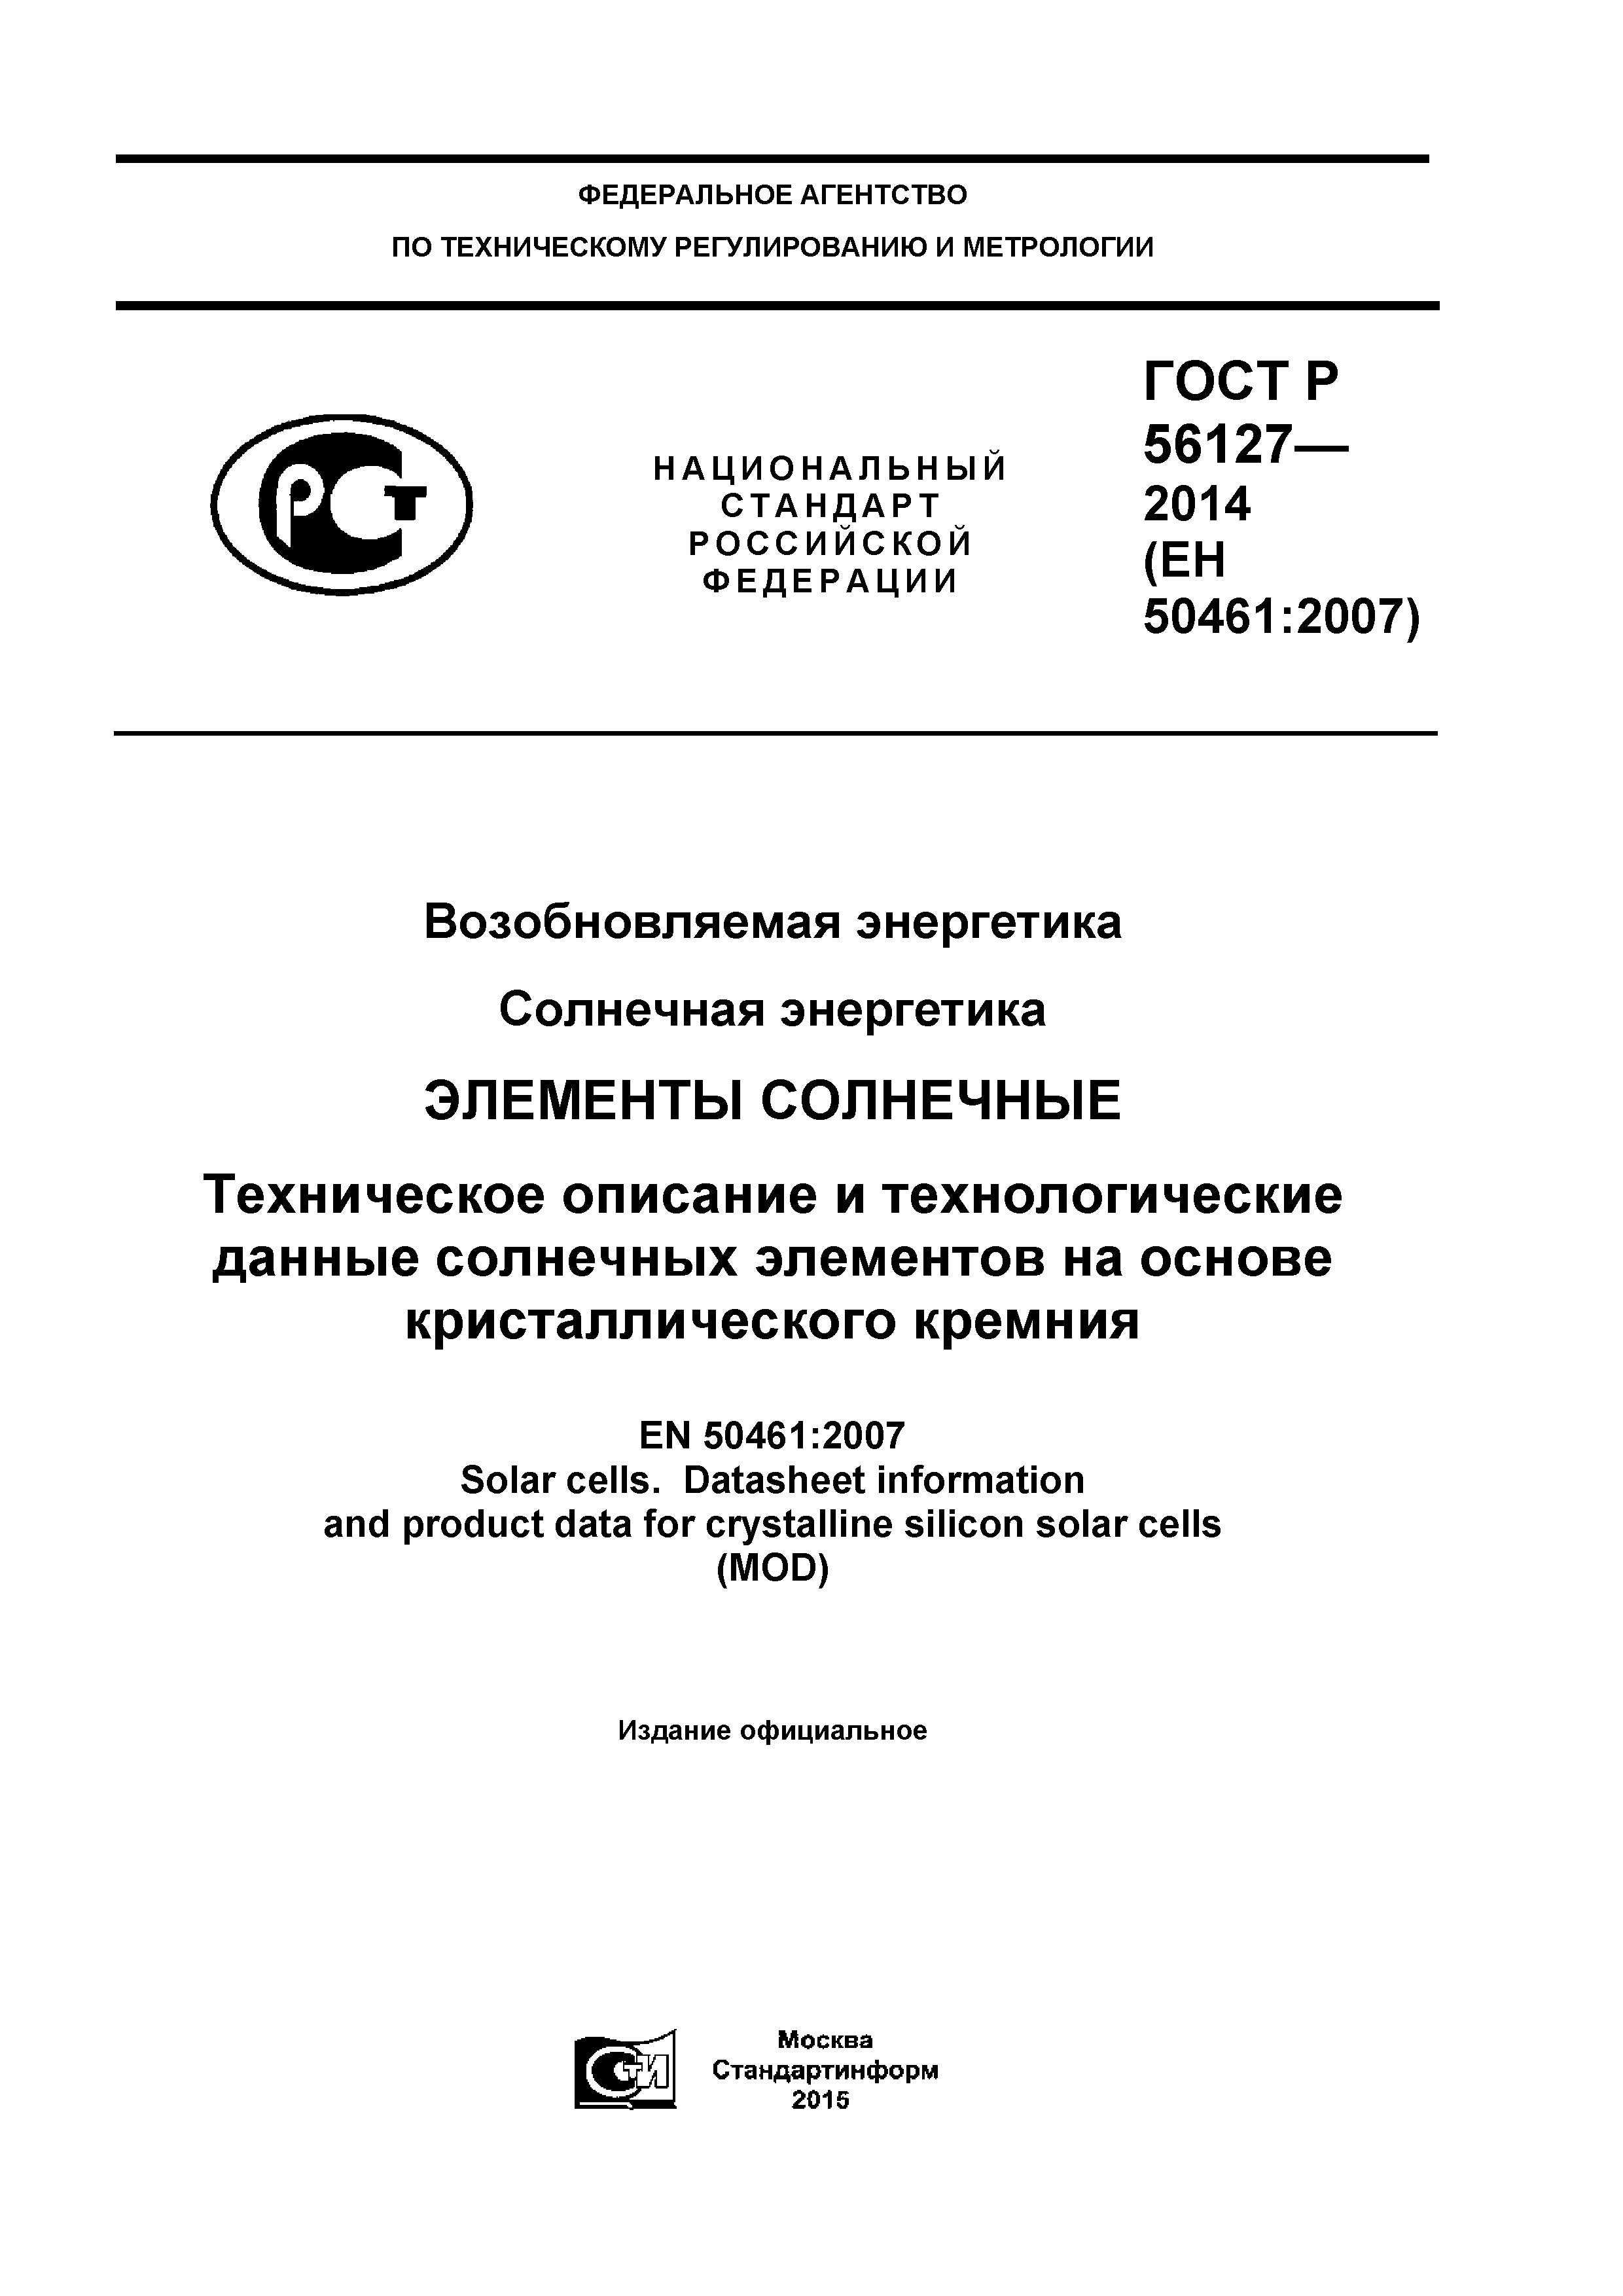 ГОСТ Р 56127-2014